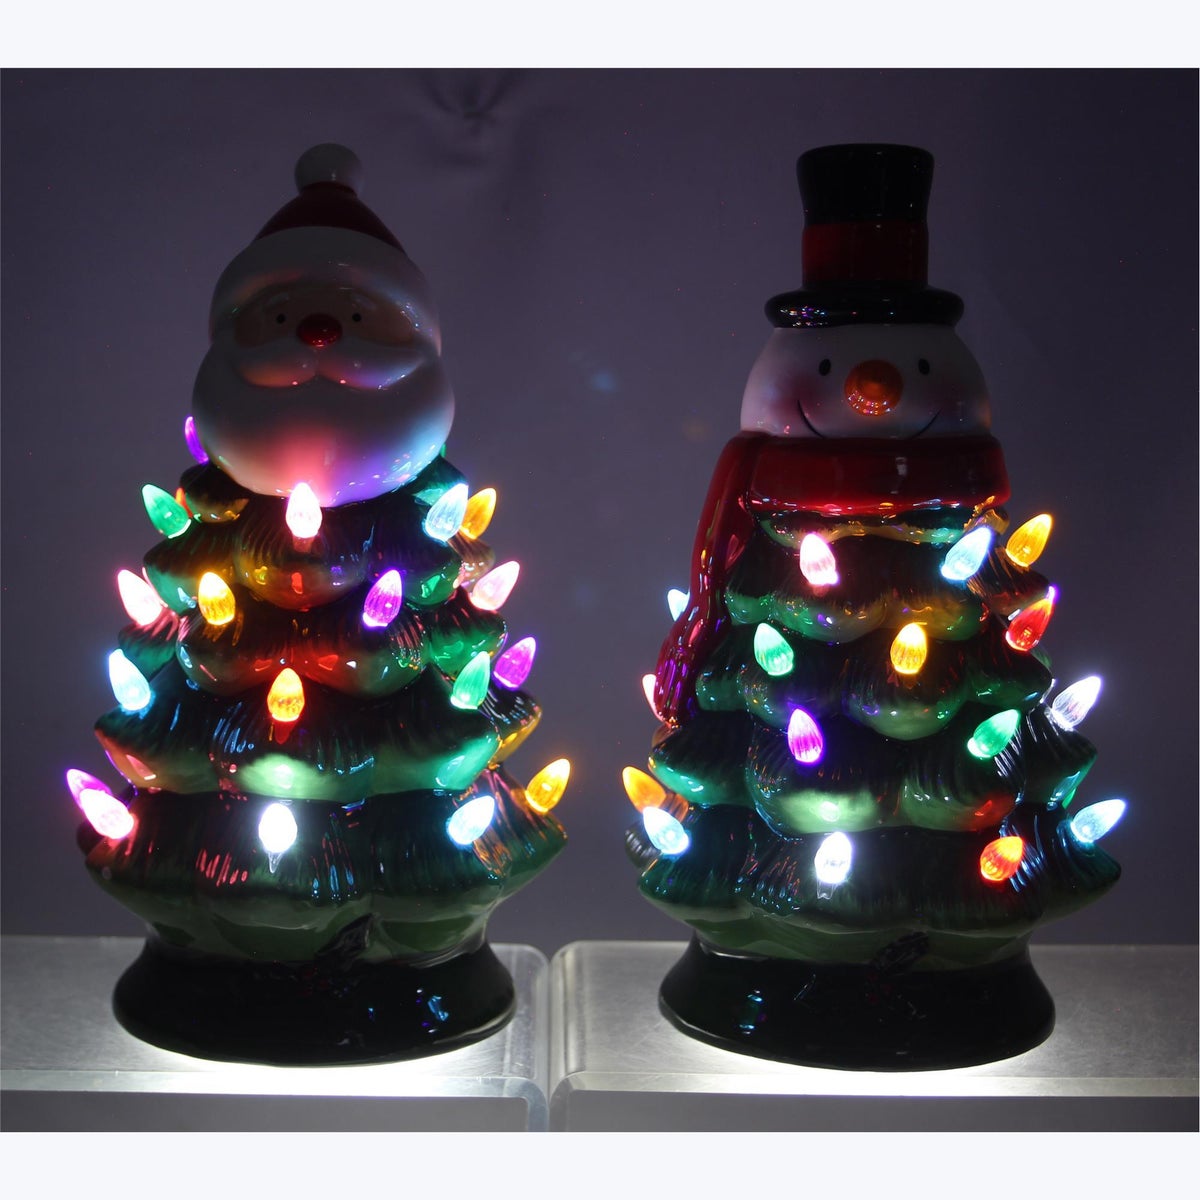 Ceramic LED Santa and Snowman Christmas Tree, 2 Ast